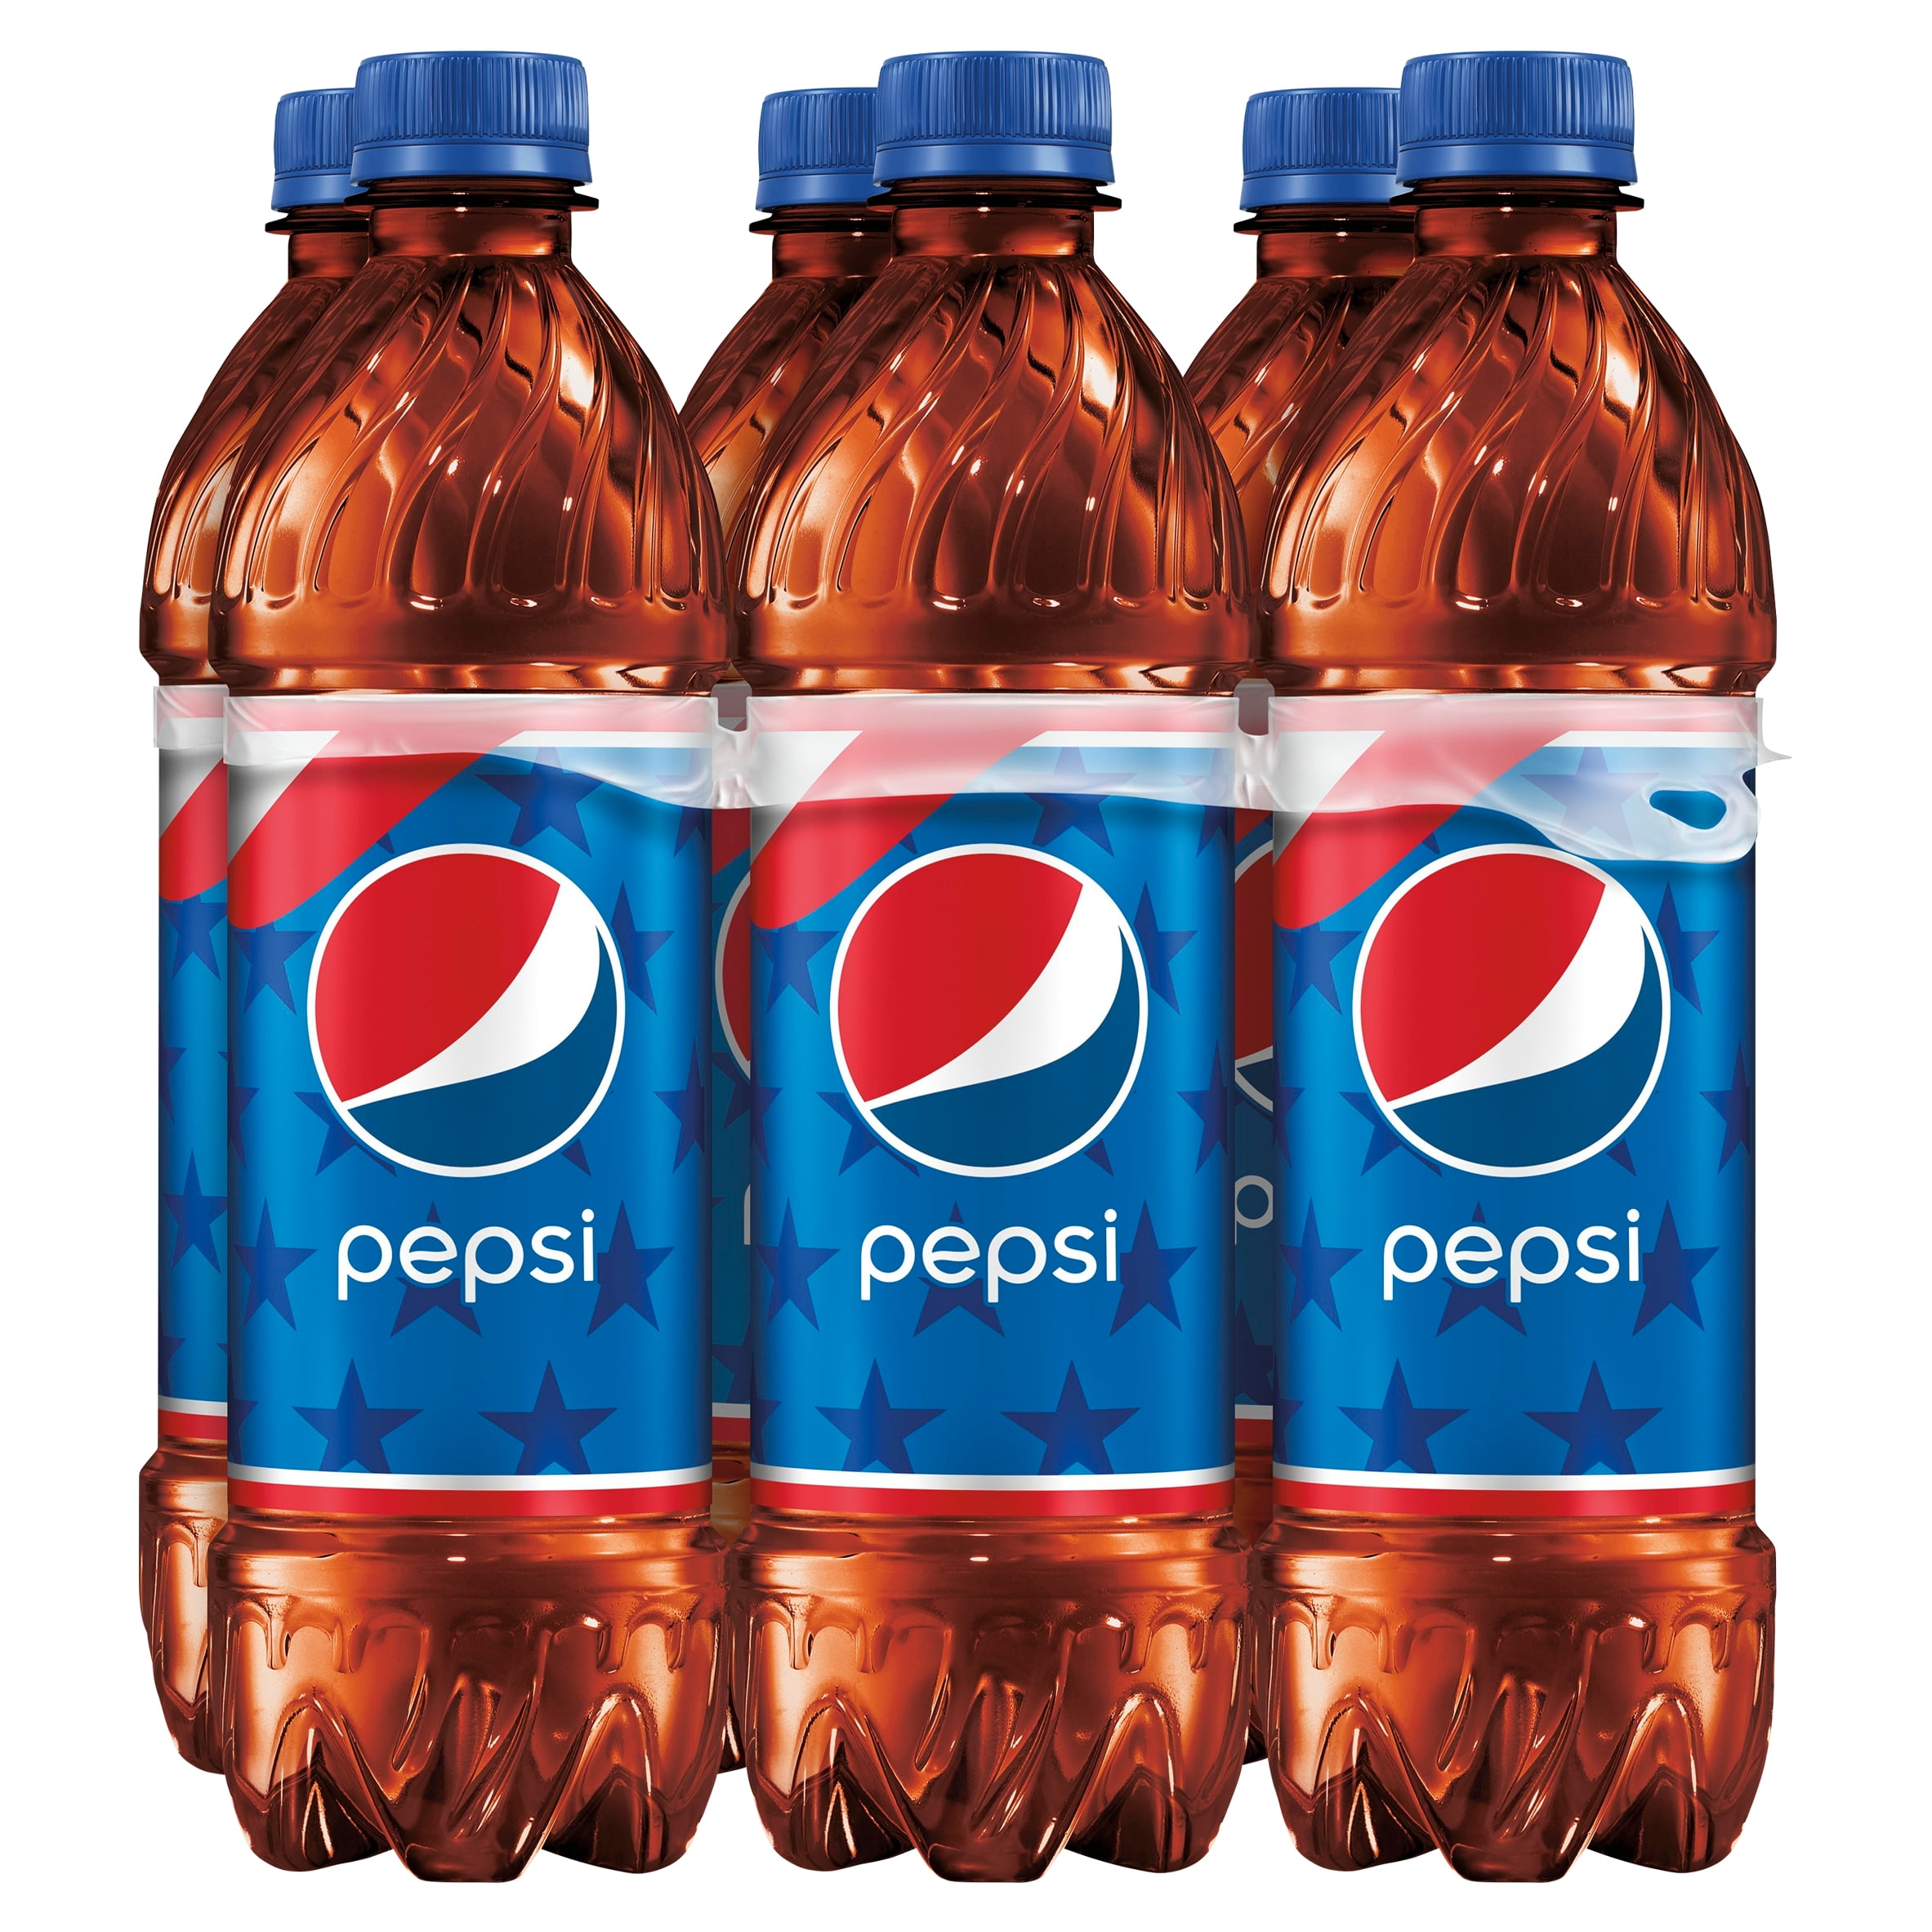 pepsi-cola-soda-pop-16-9-oz-6-pack-bottles-walmart-business